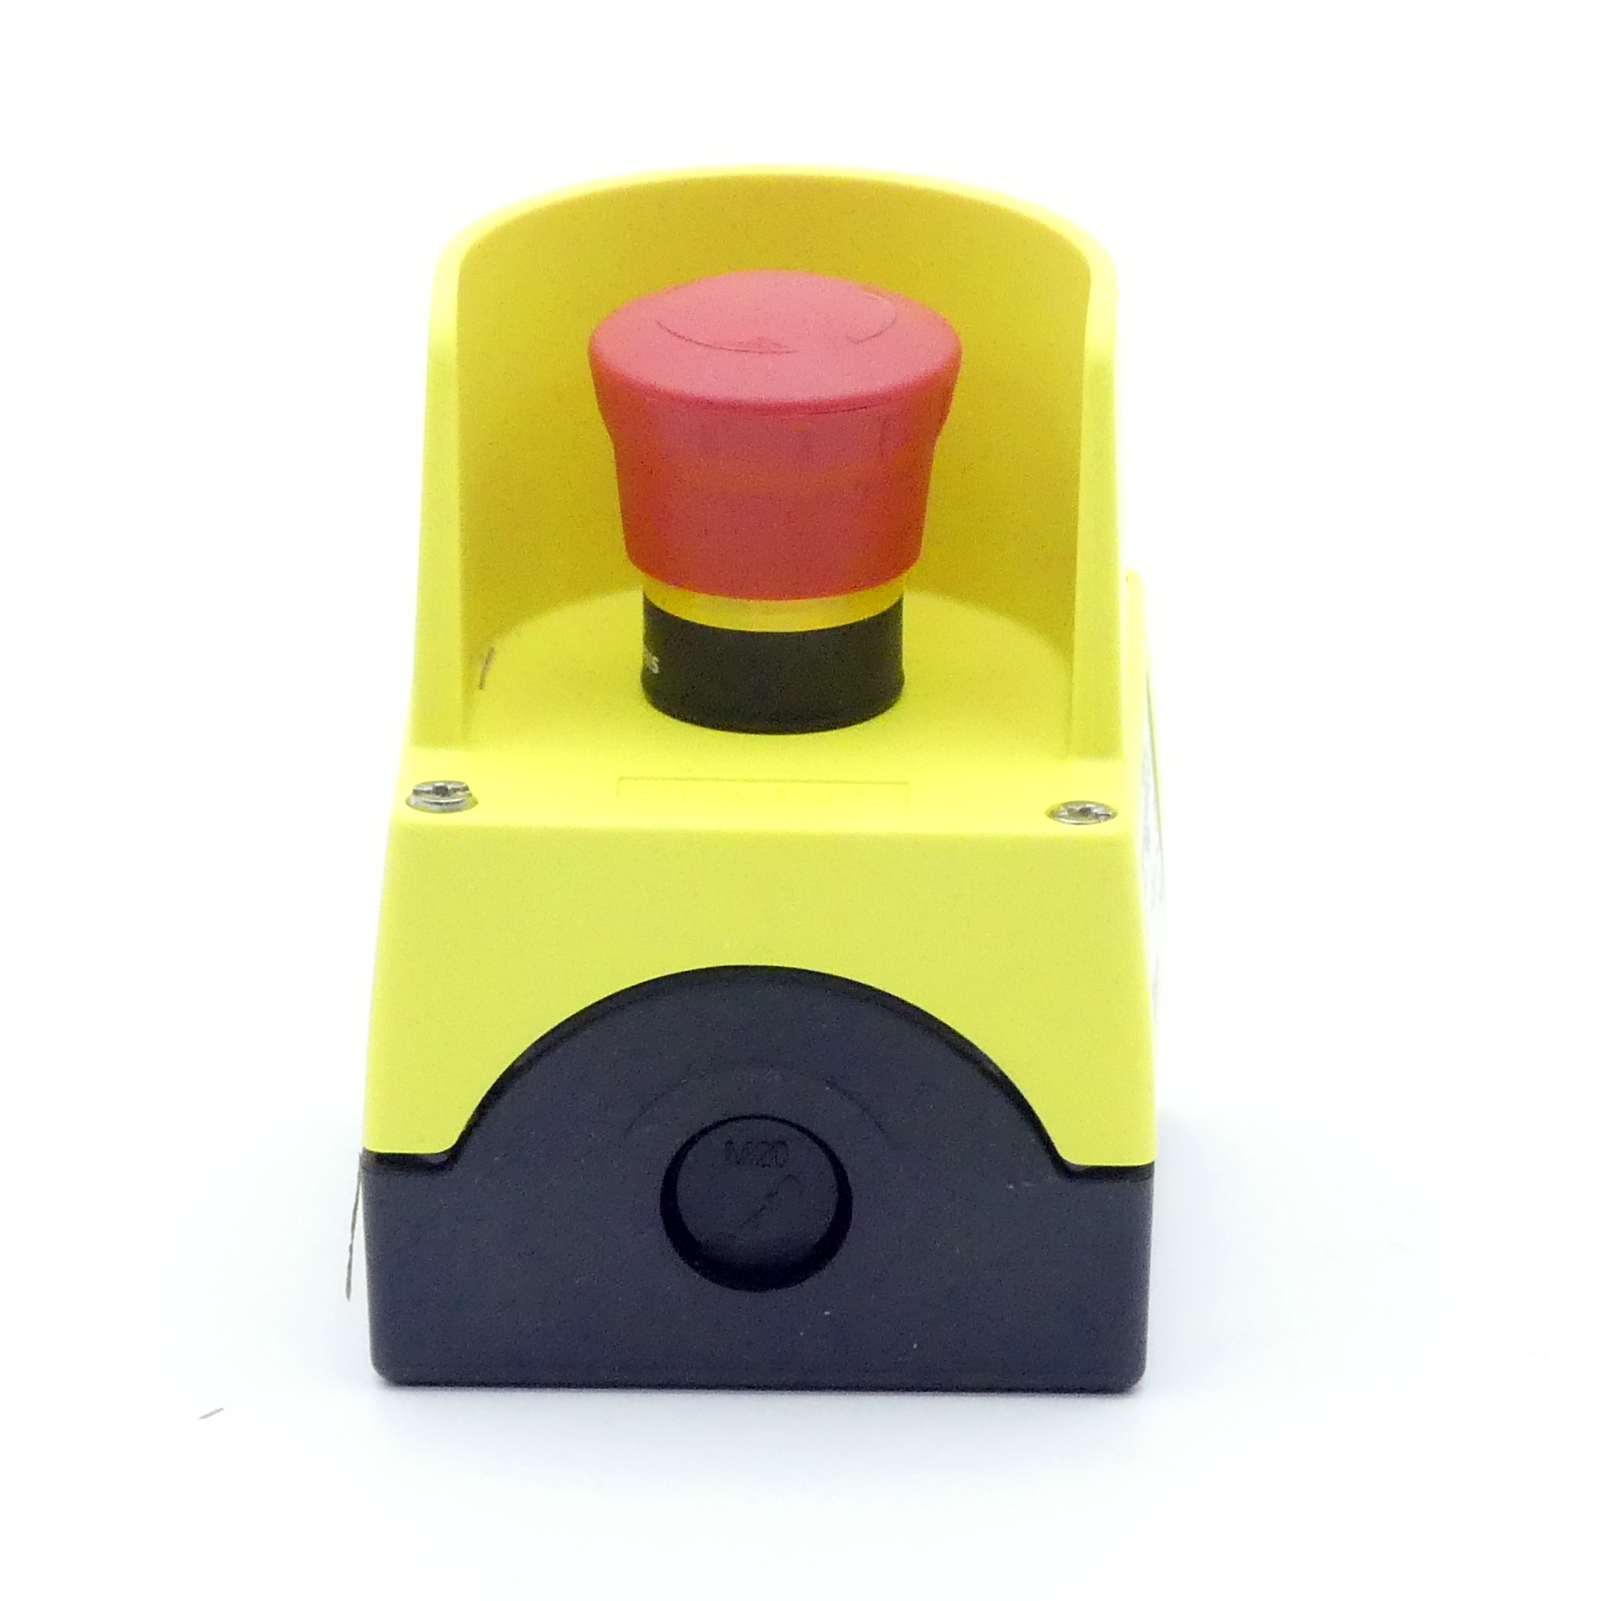 Mushroom button in yellow housing IEC 60947-5-1 